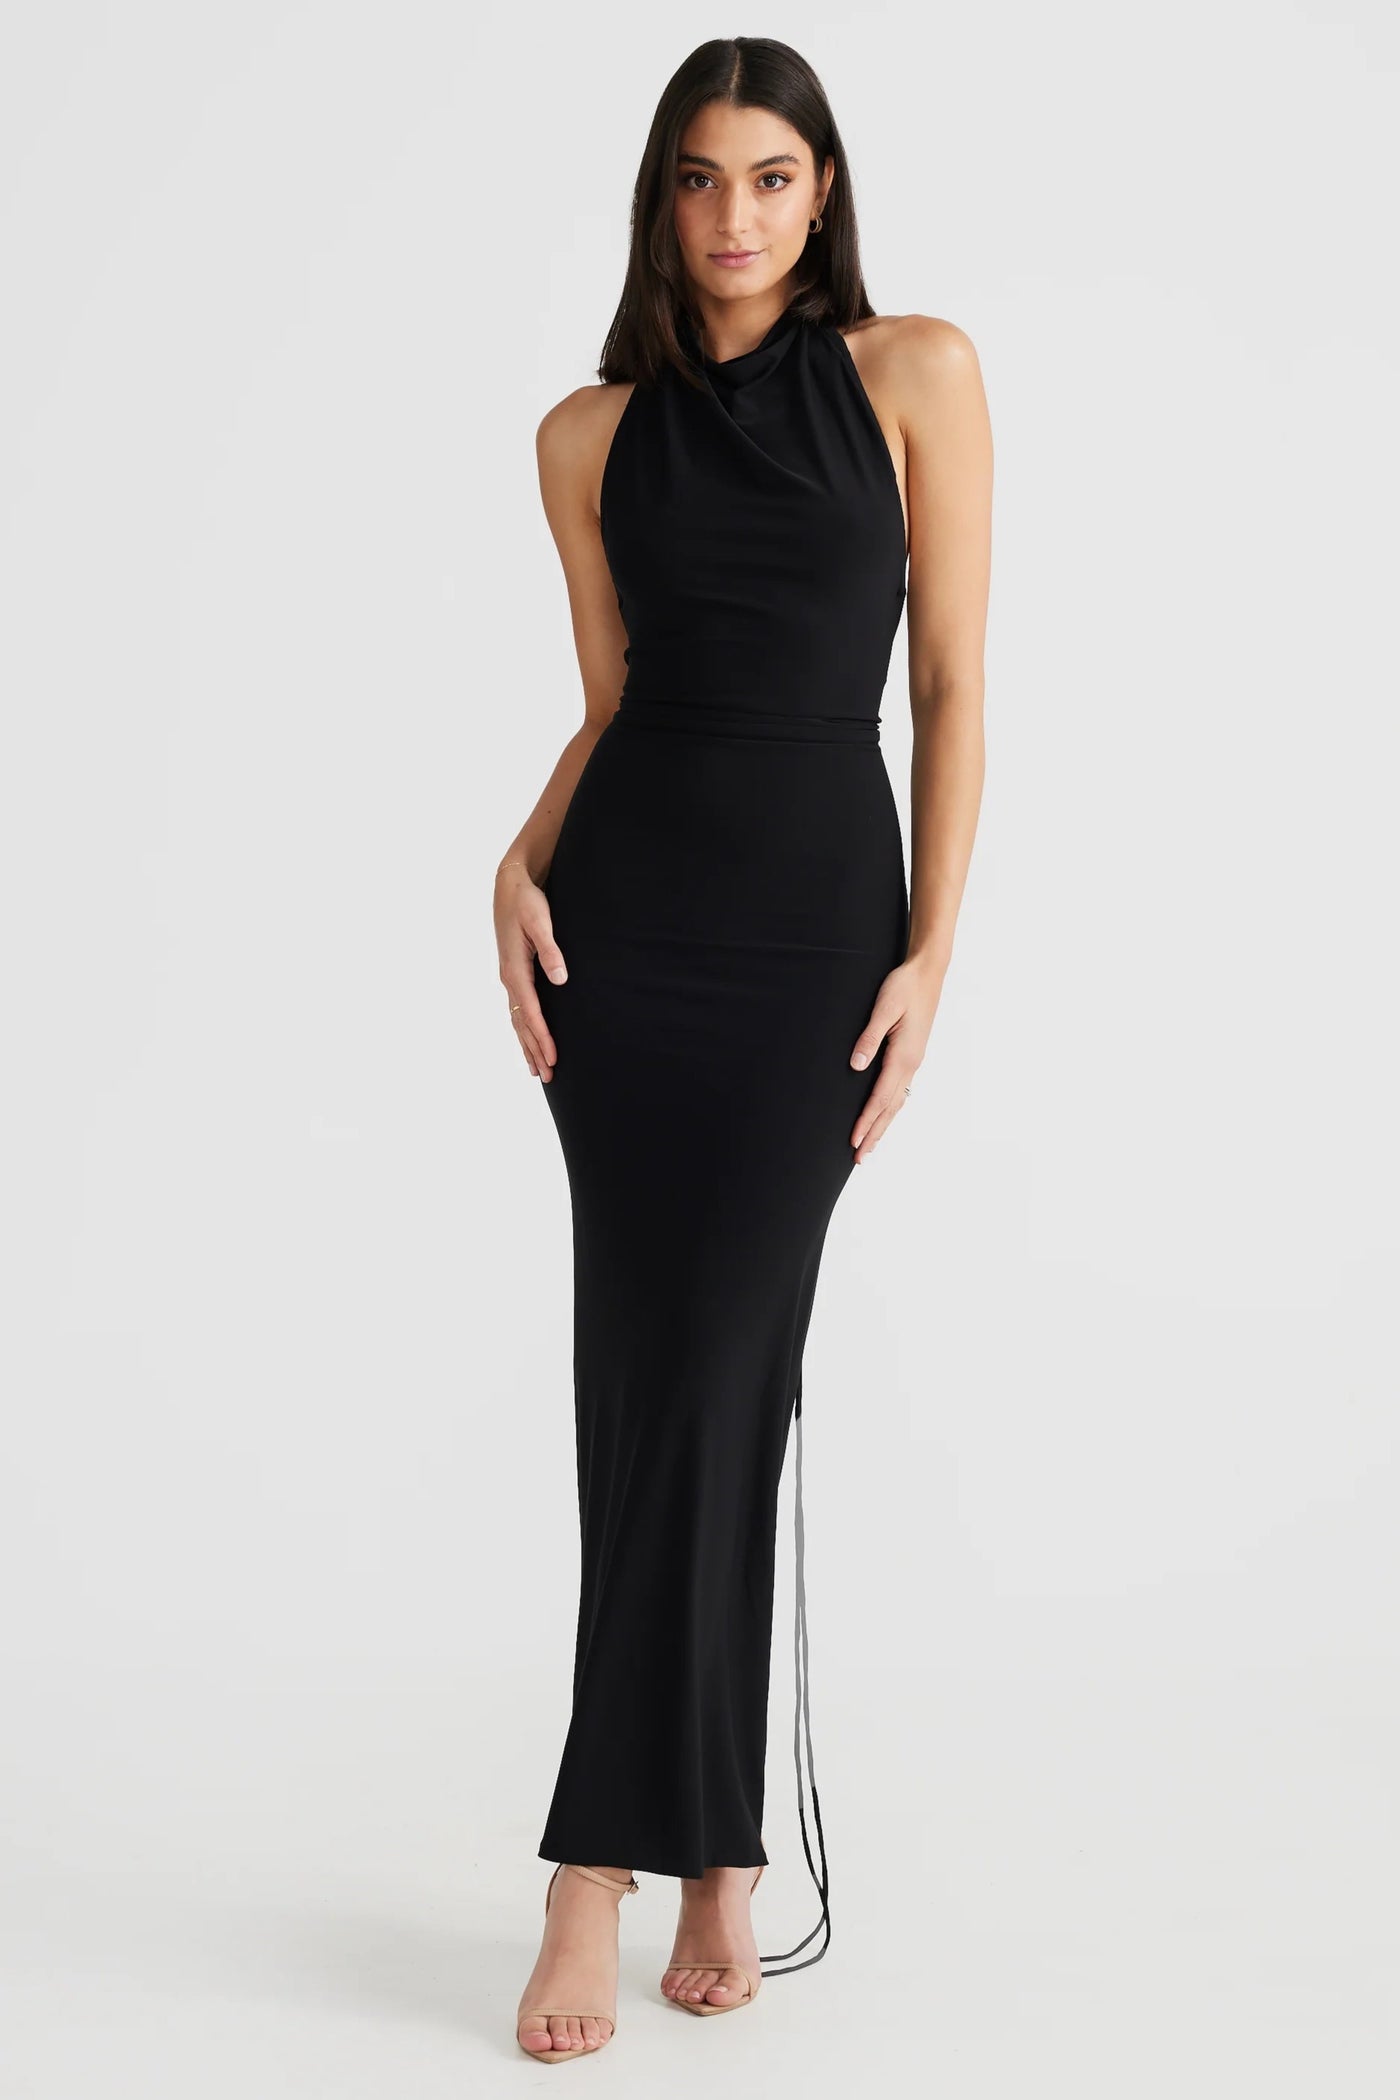 Natali Multi-Way Dress - Black - SHOPJAUS - JAUS